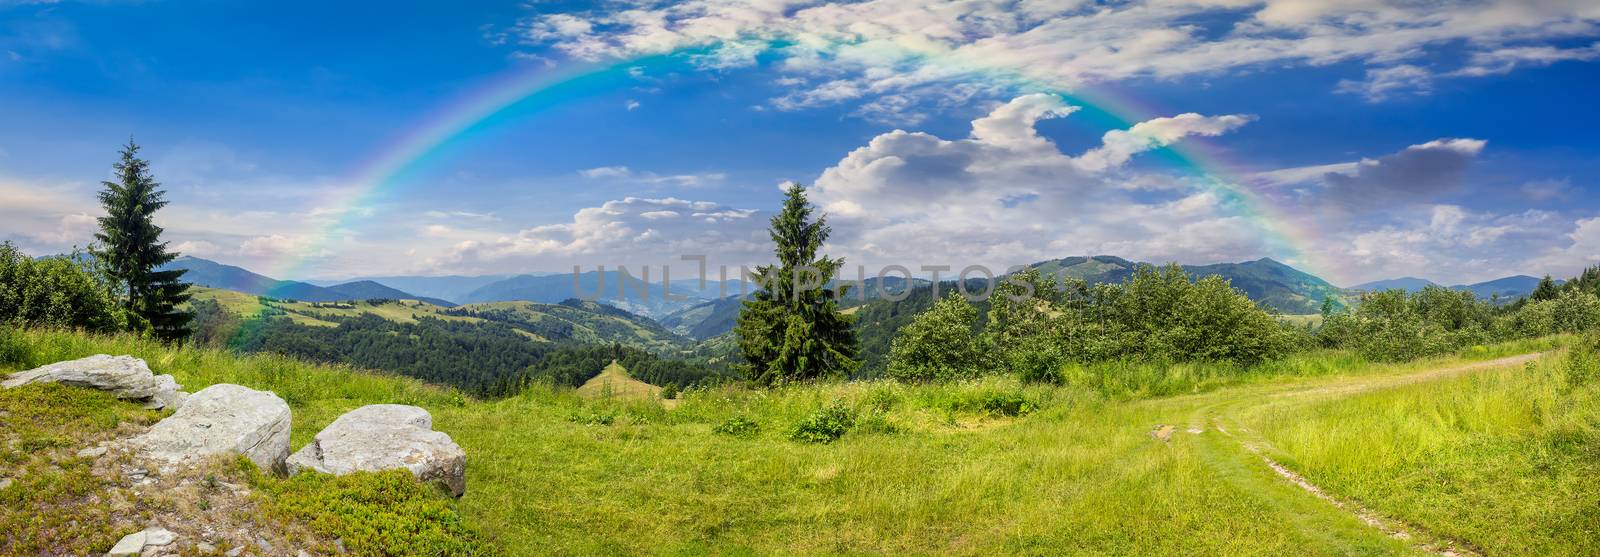 boulders on hillside meadow in mountain with rainbow  by Pellinni